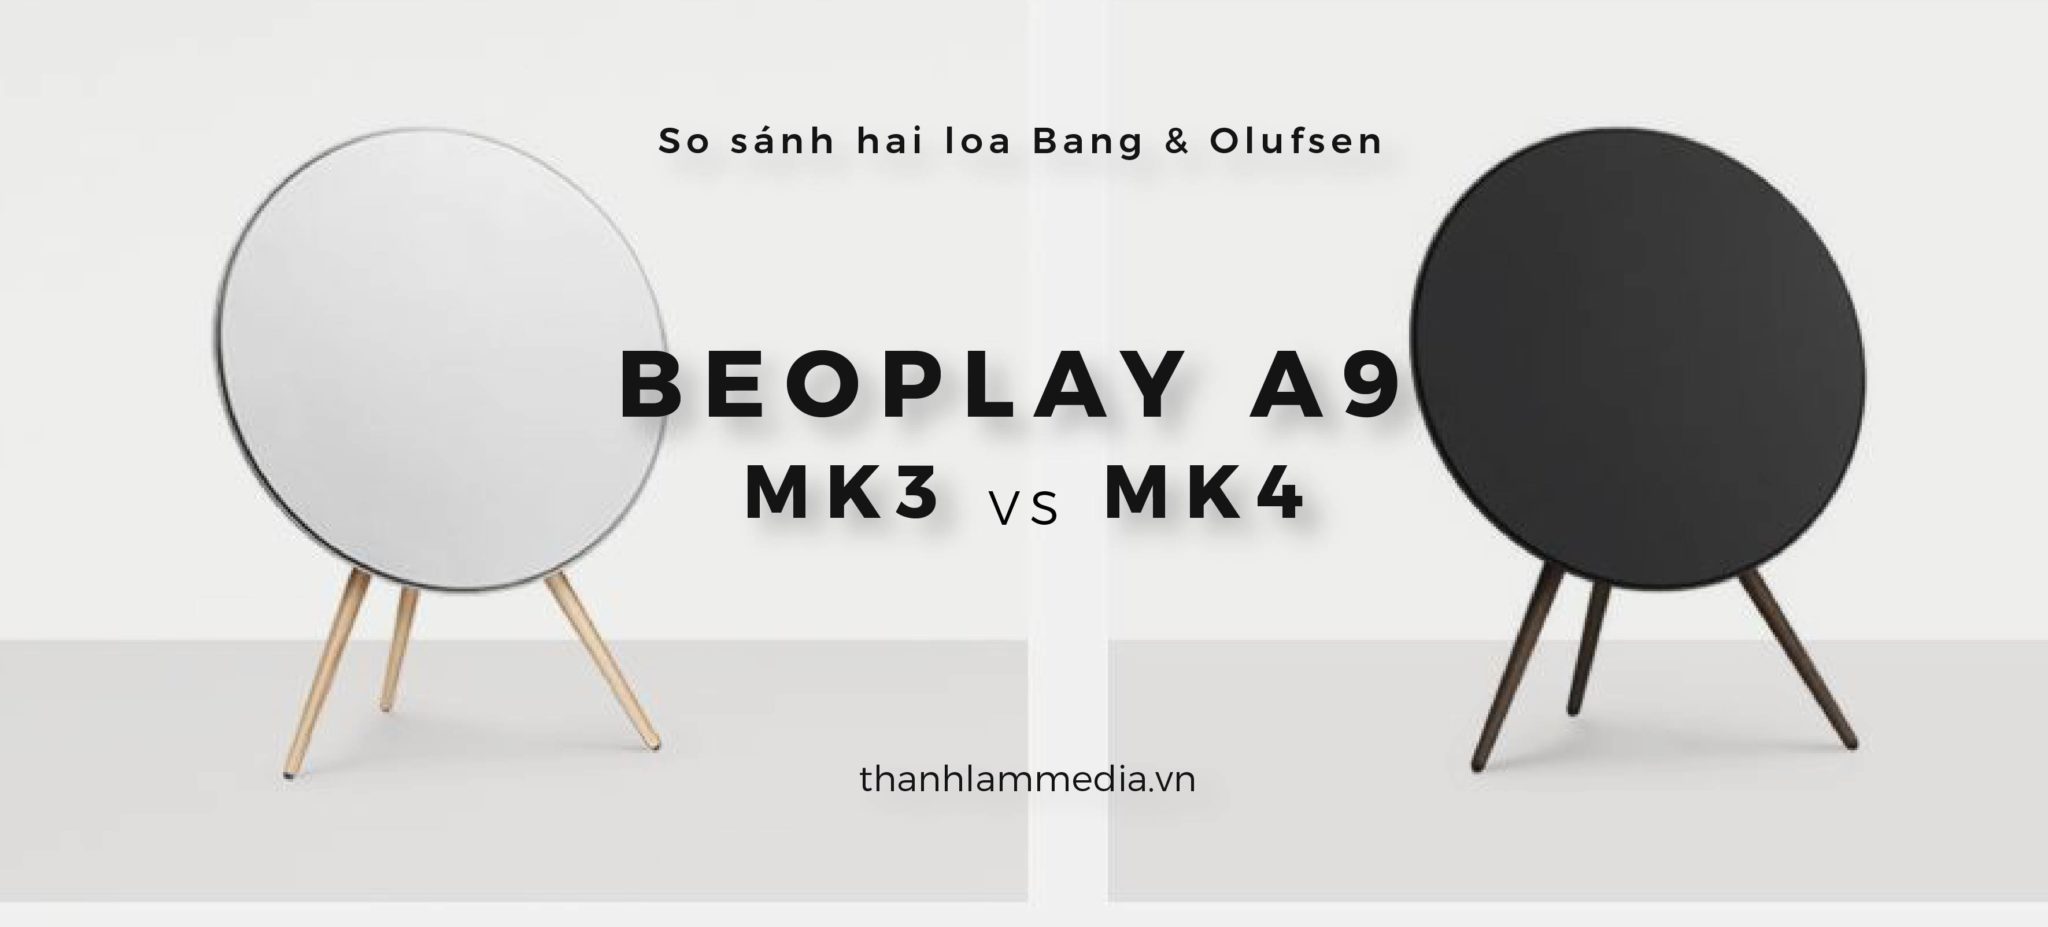 So sánh hai loa Beoplay A9 Mk3 và Beoplay A9 Mk4 29